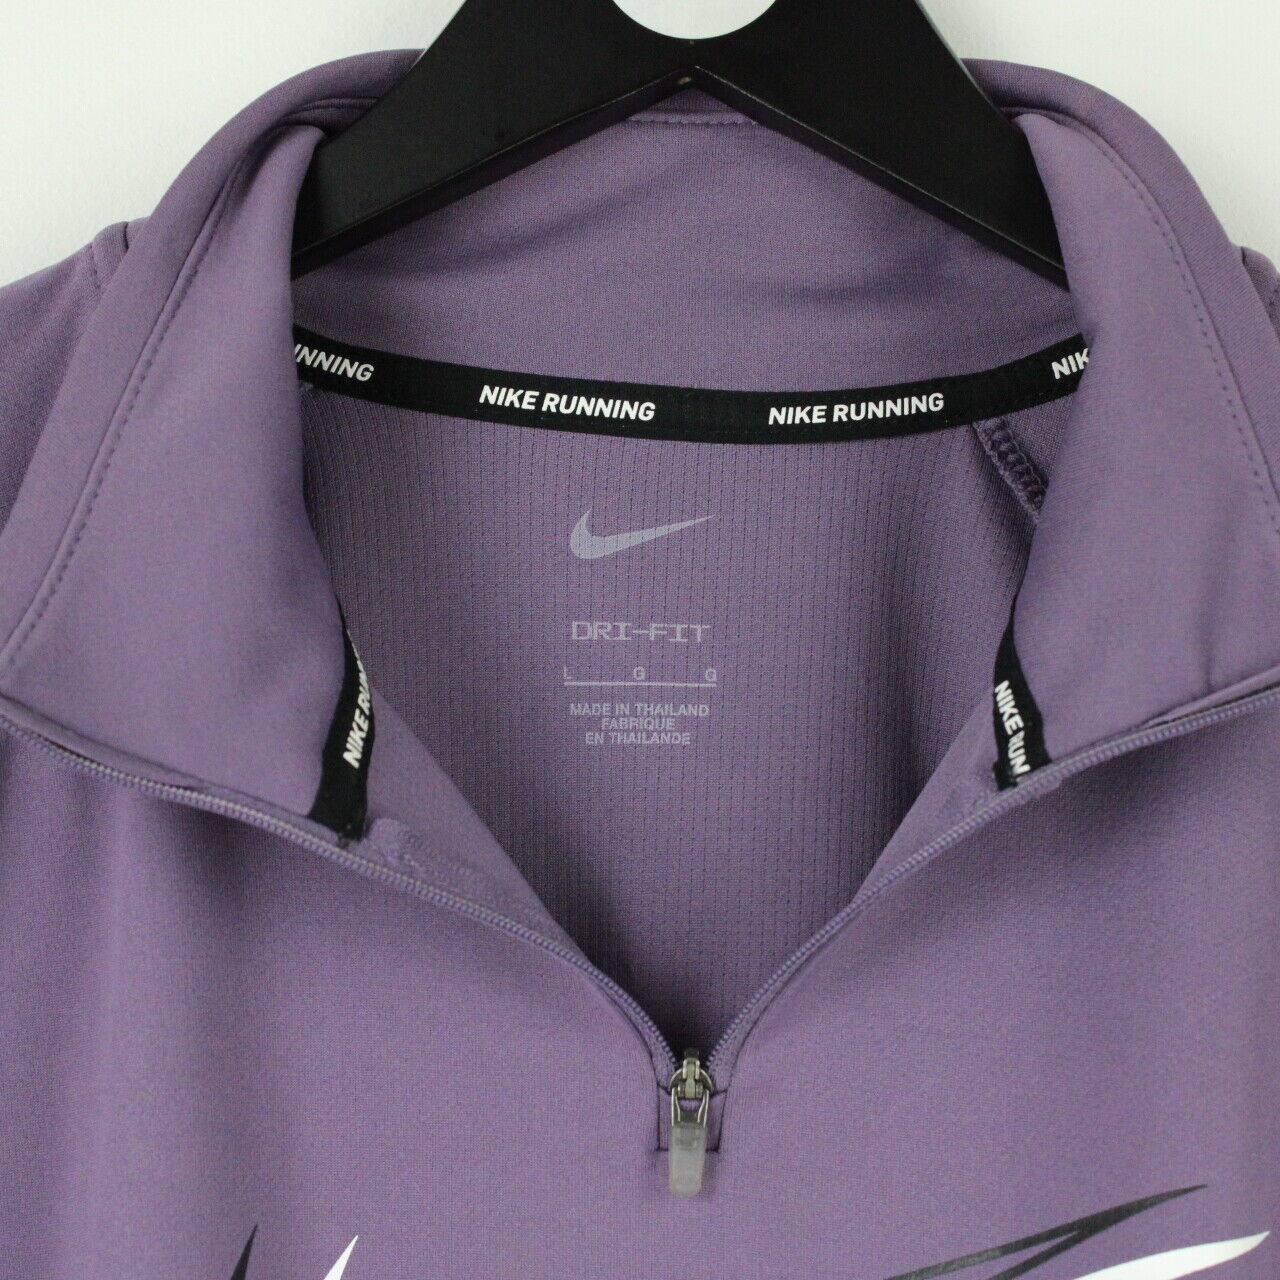 Womens NIKE 1/4 Zip Sweatshirt Purple | Large